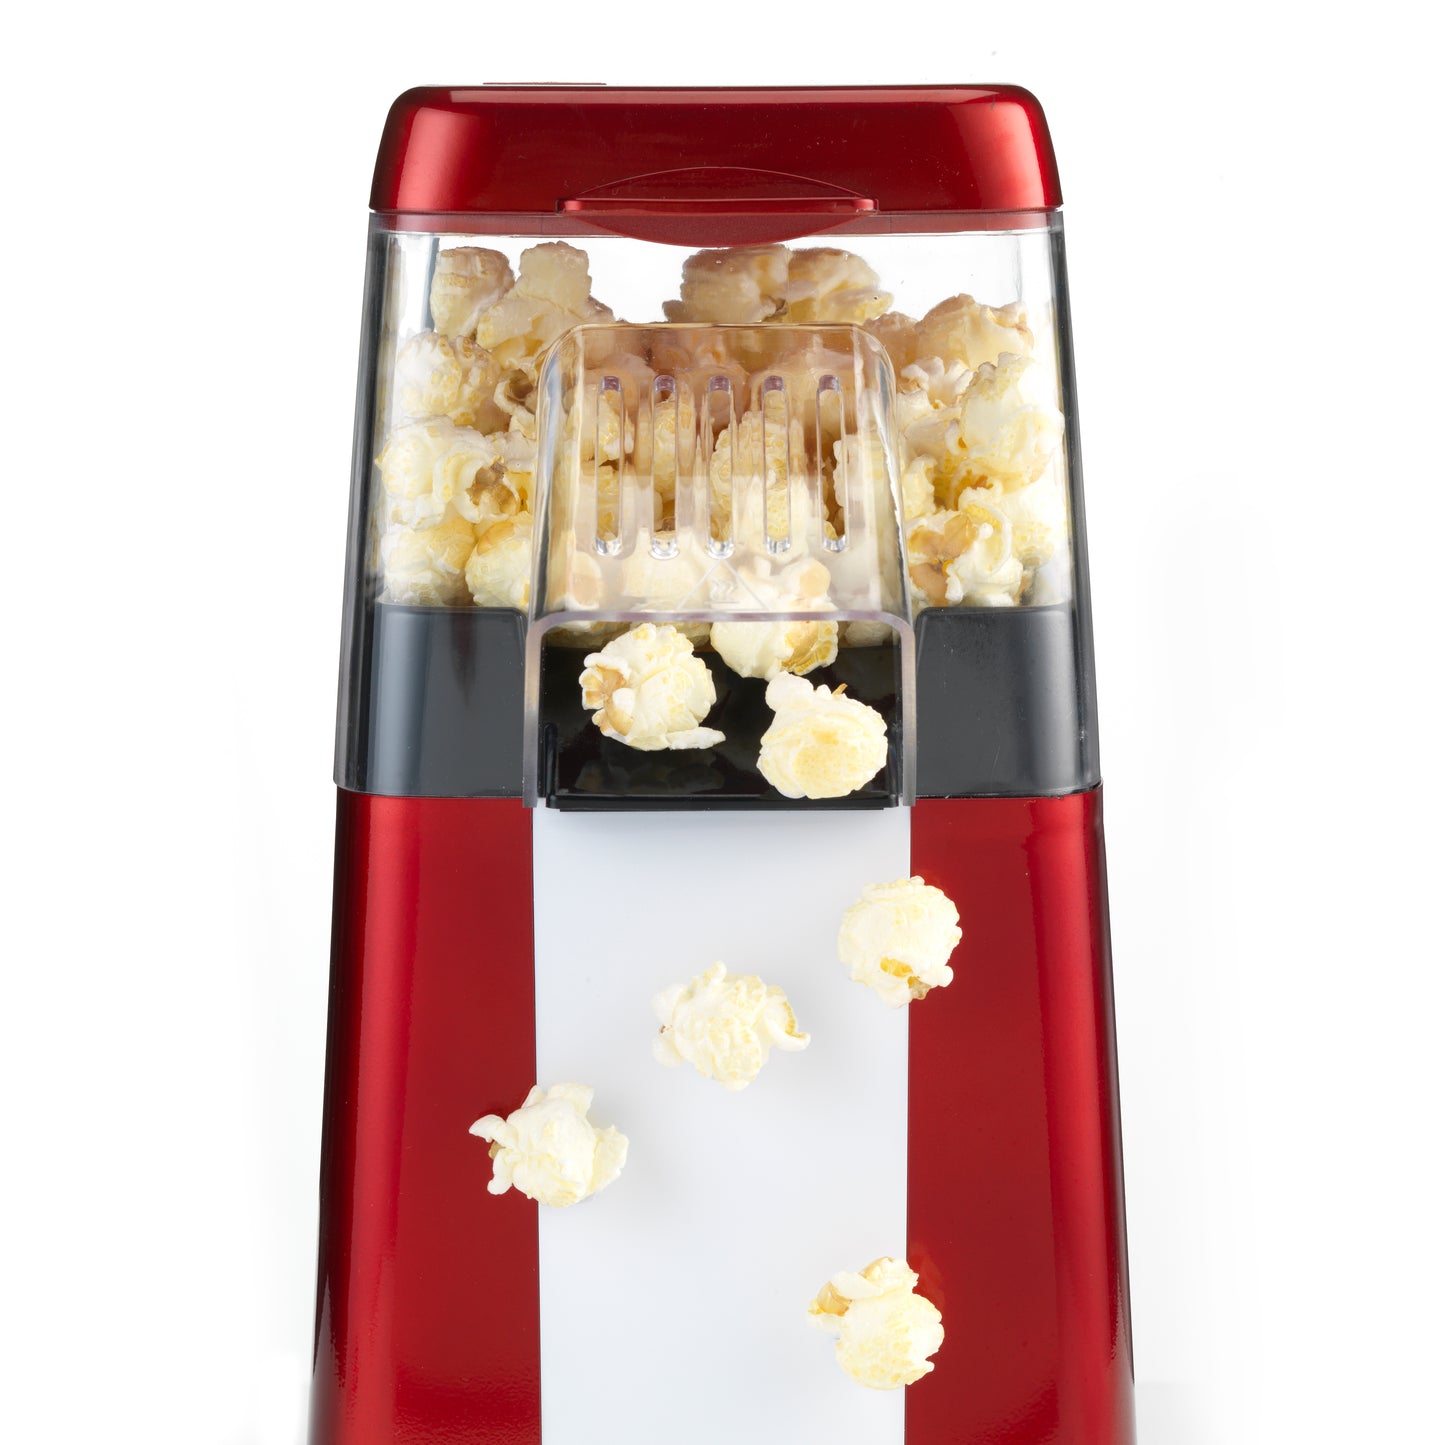 Trebs 99387 - Popcornmaschine - Retro Rot